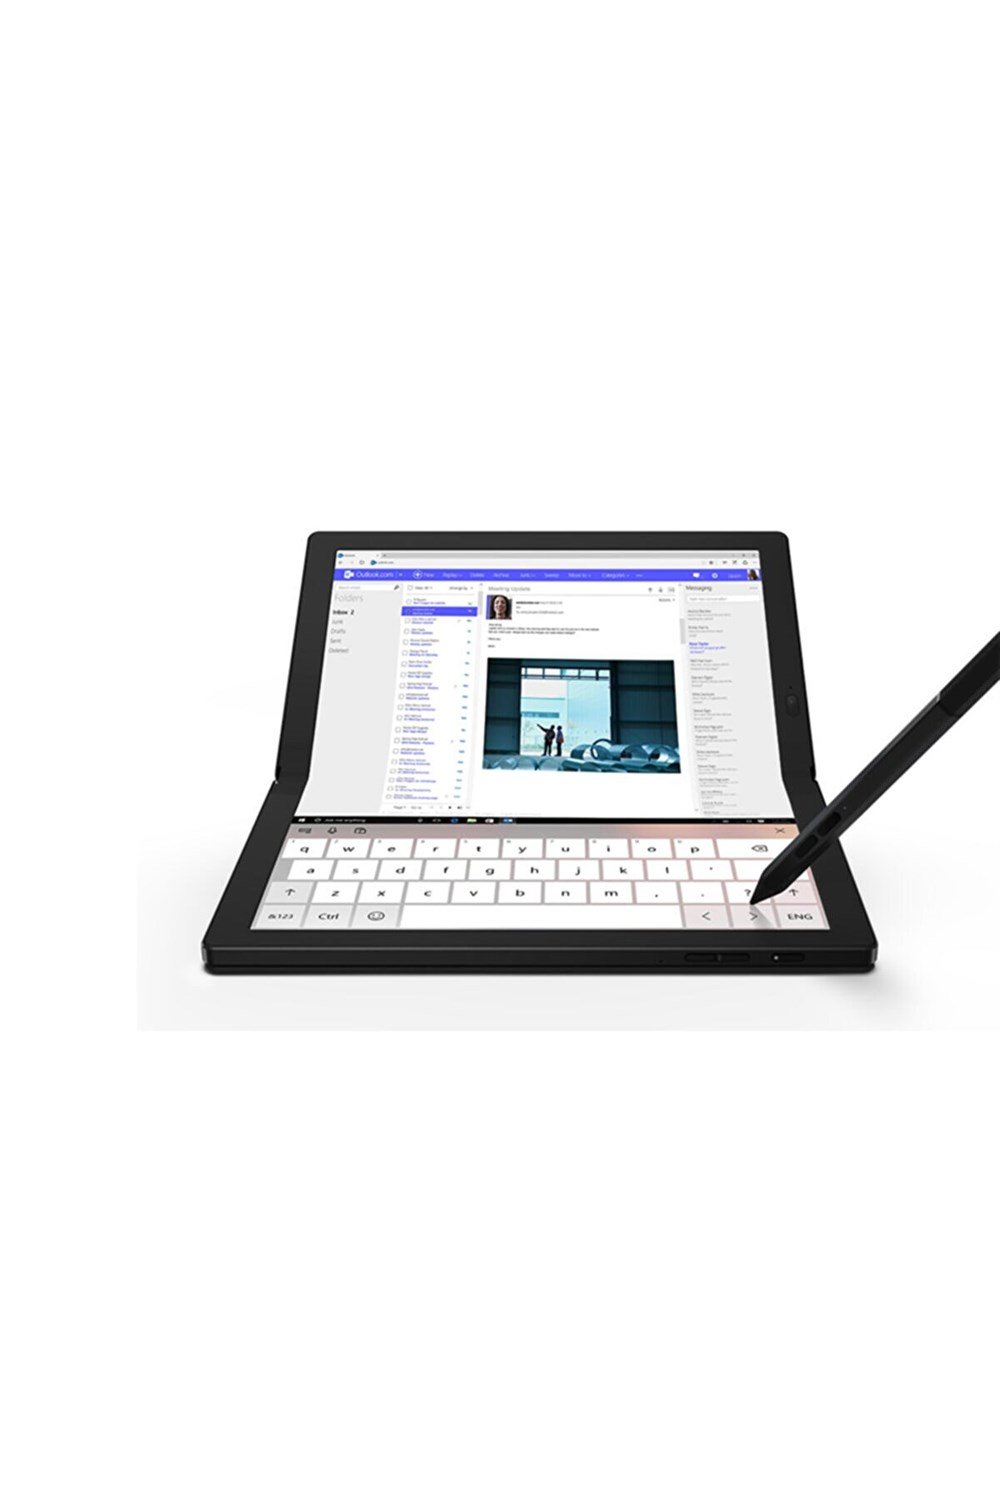 LENOVO Thinkpad X1 Fold G1 I5 8gb 1tb Katlanan Ekranlı Hem Laptop Hem Tablet  Win 10